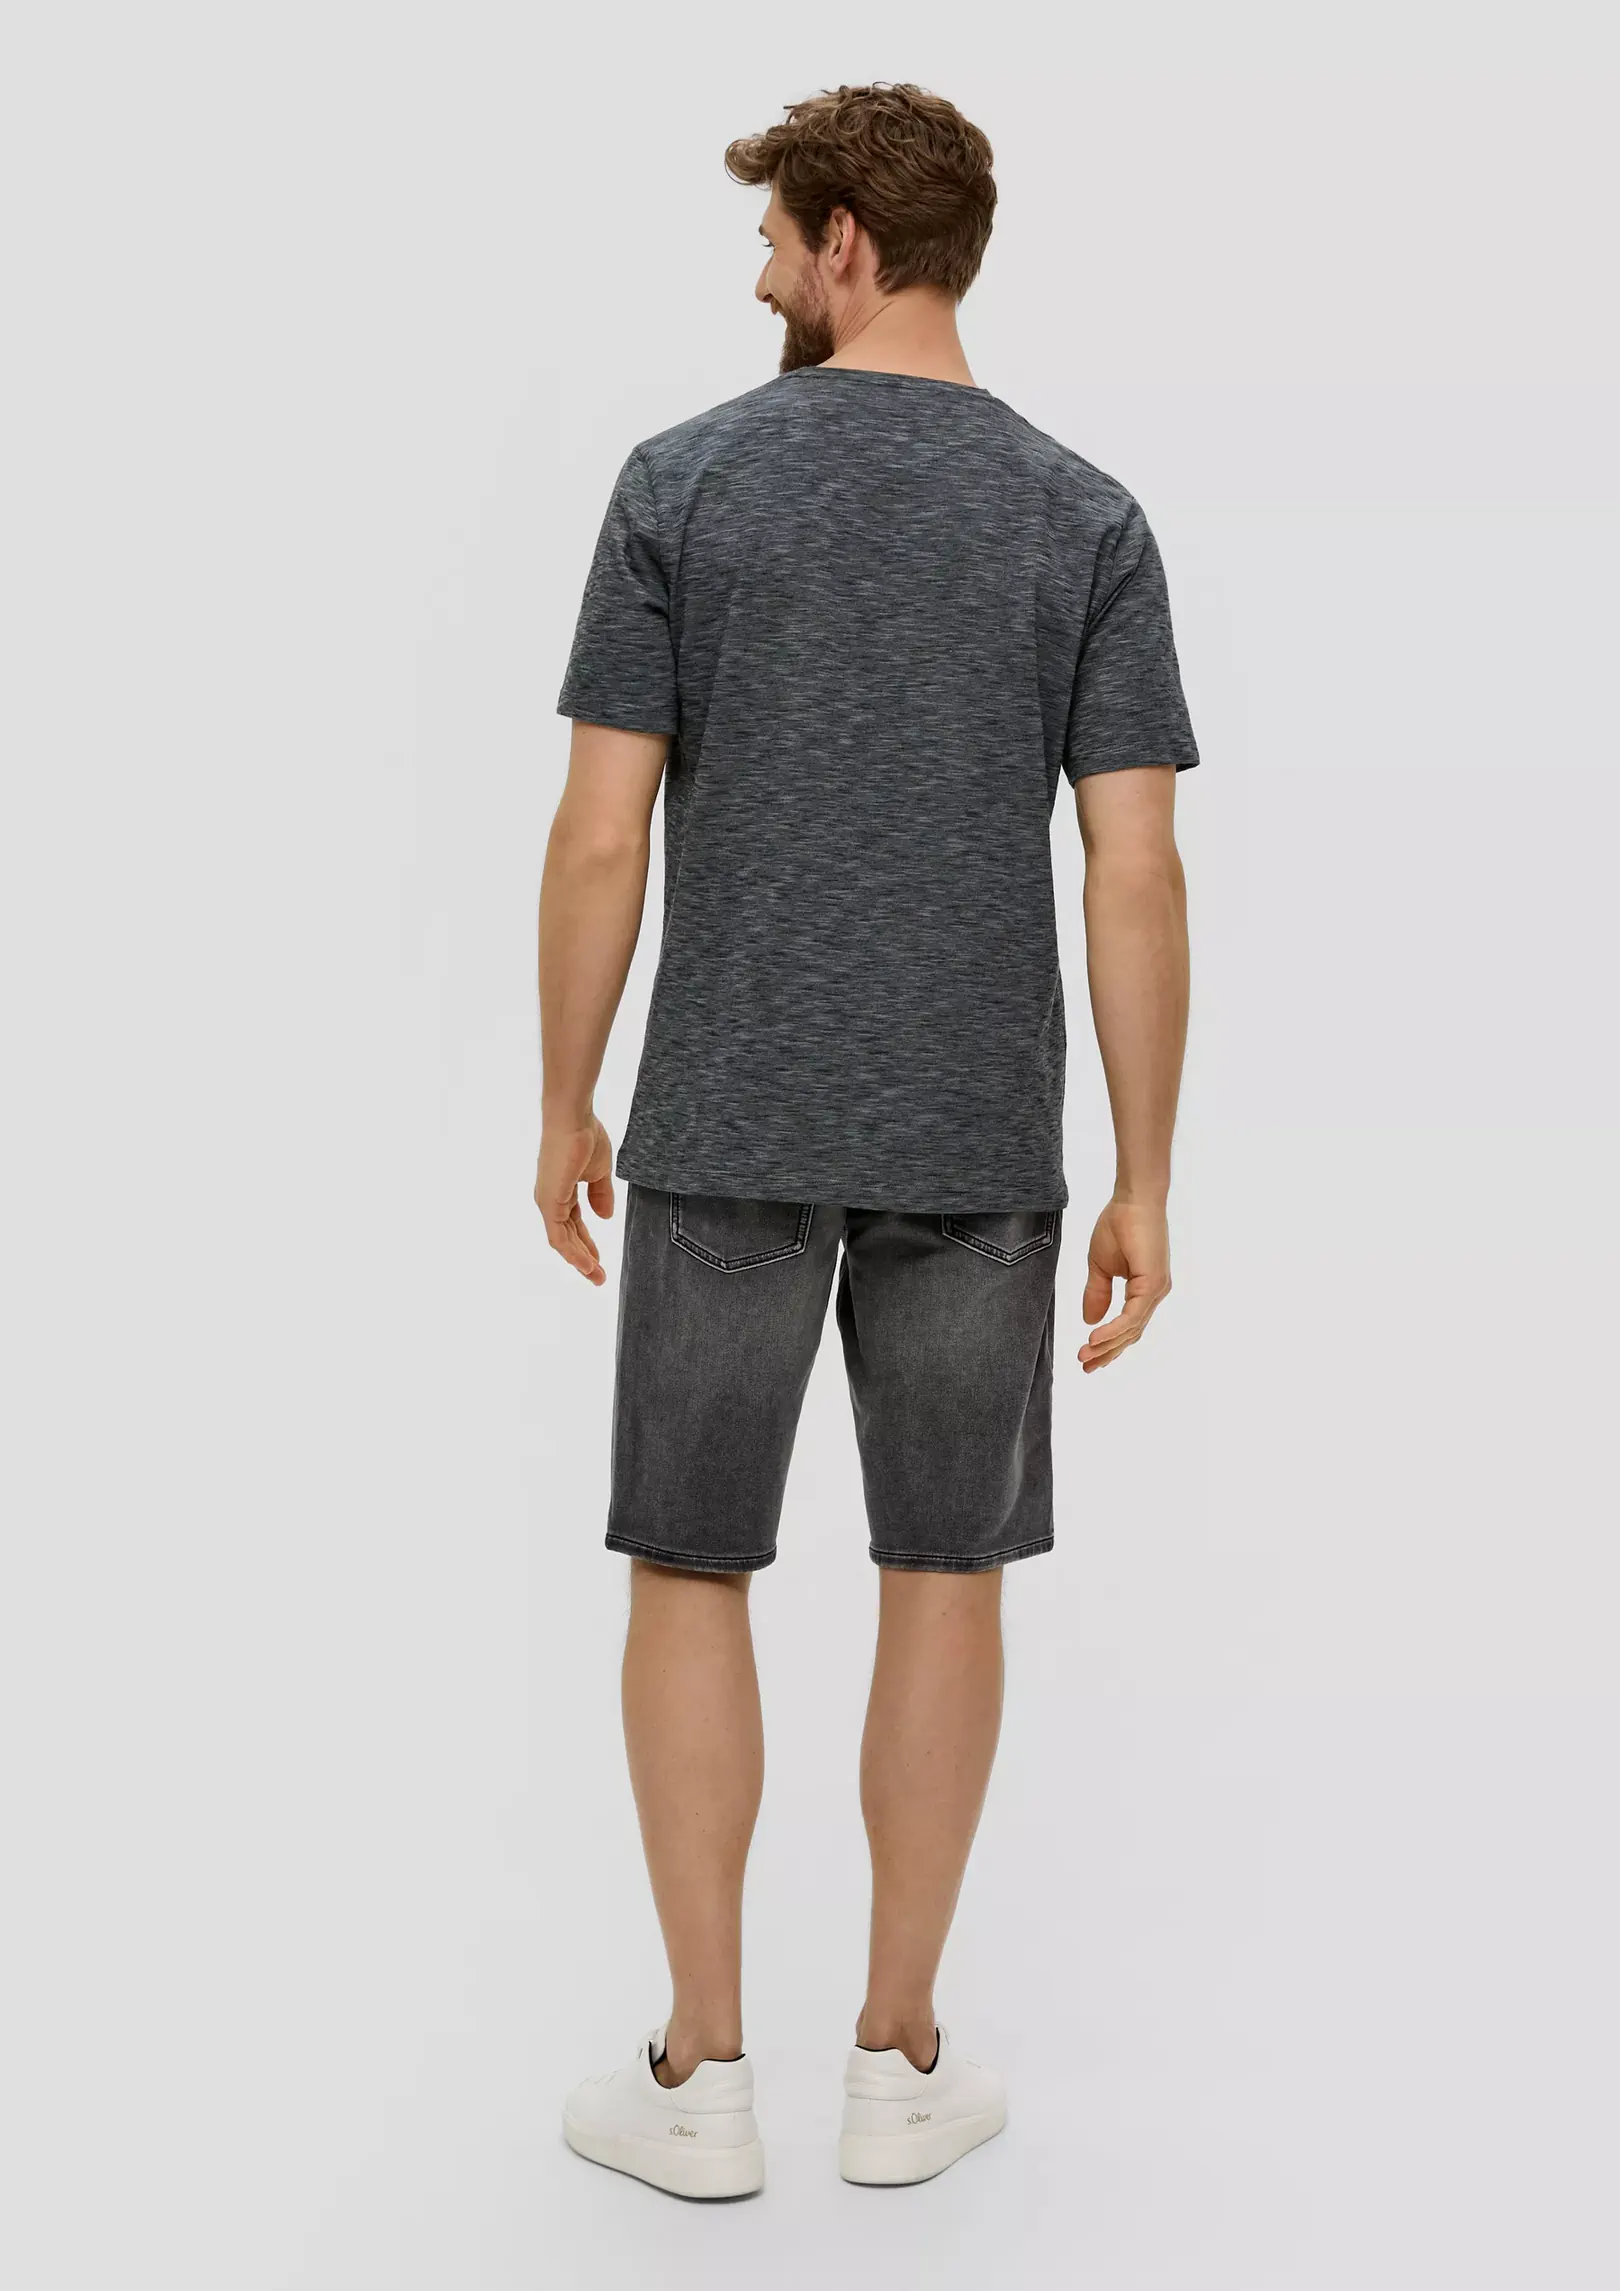 Mens Plain Cotton Regular T Shirt Black.2141235 (7)